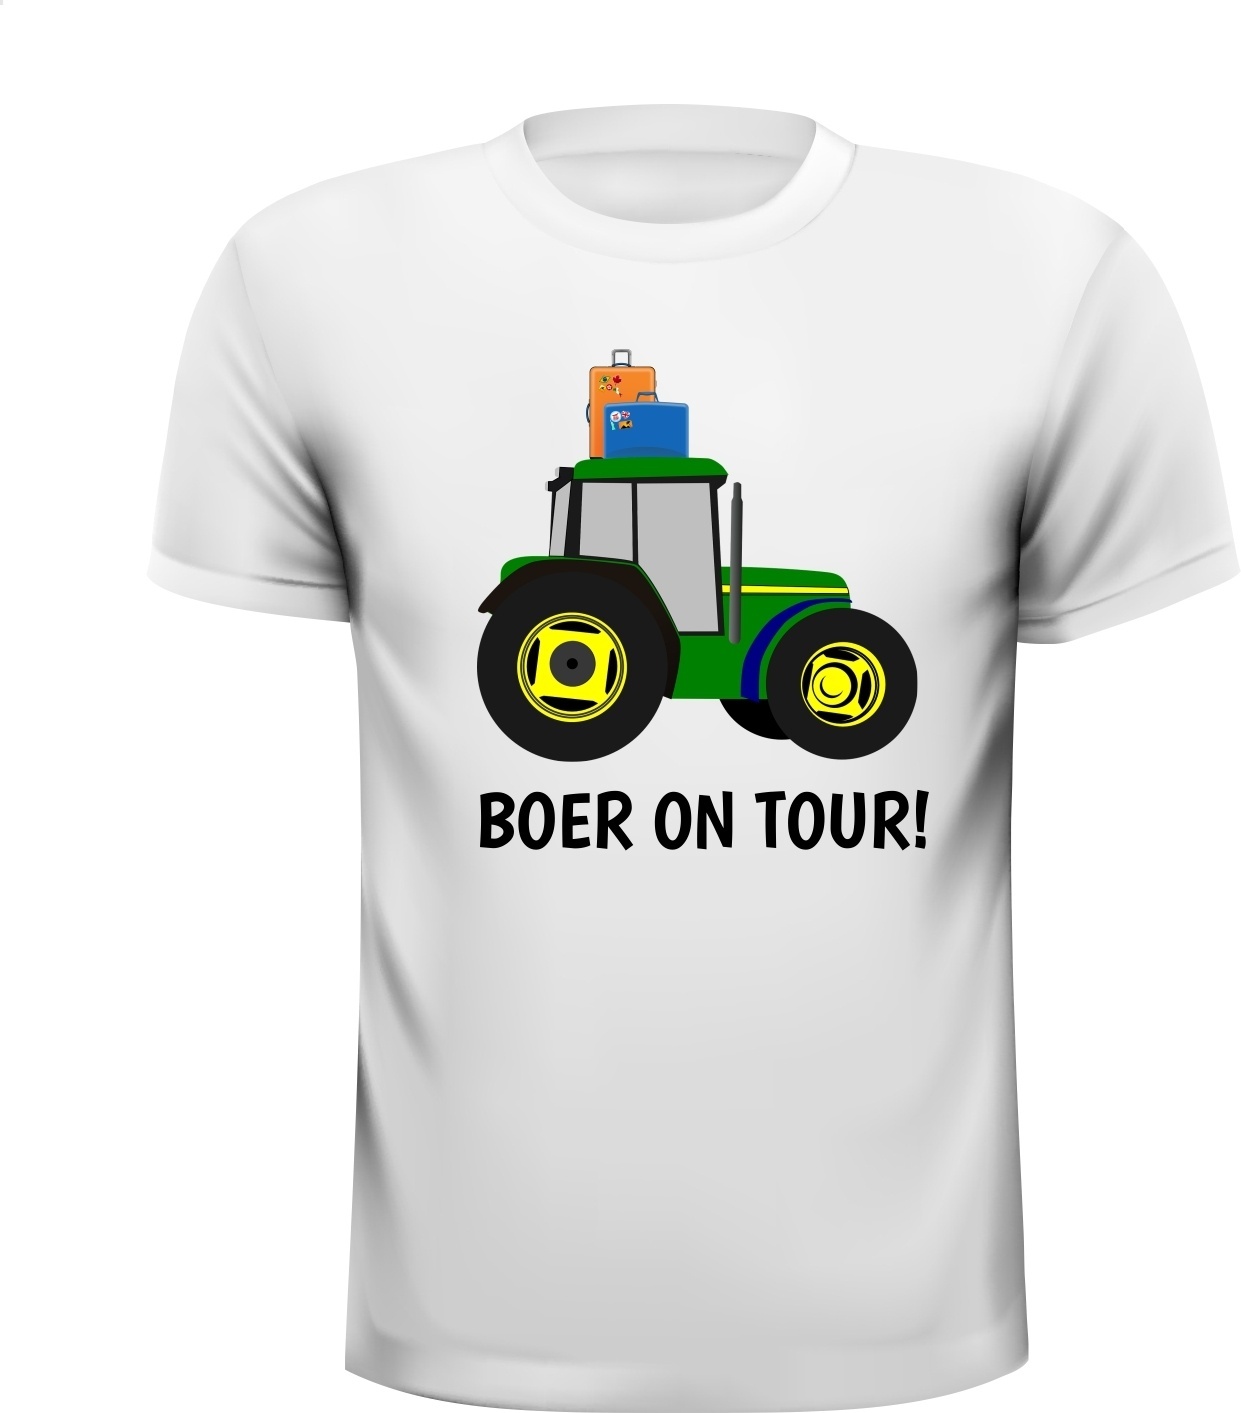 Boer on tour T-shirt